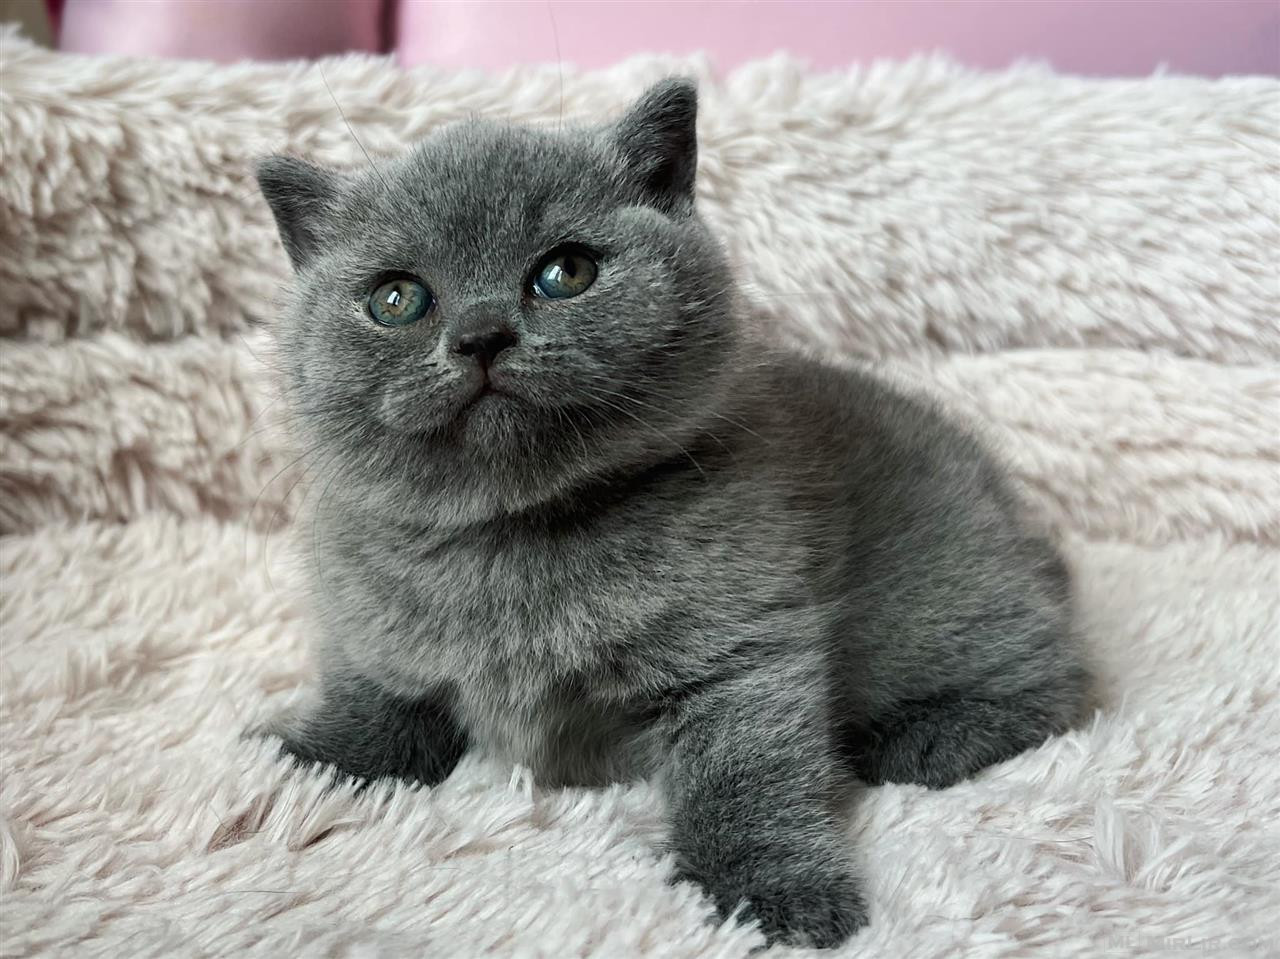 British shorthair kitten for adoption